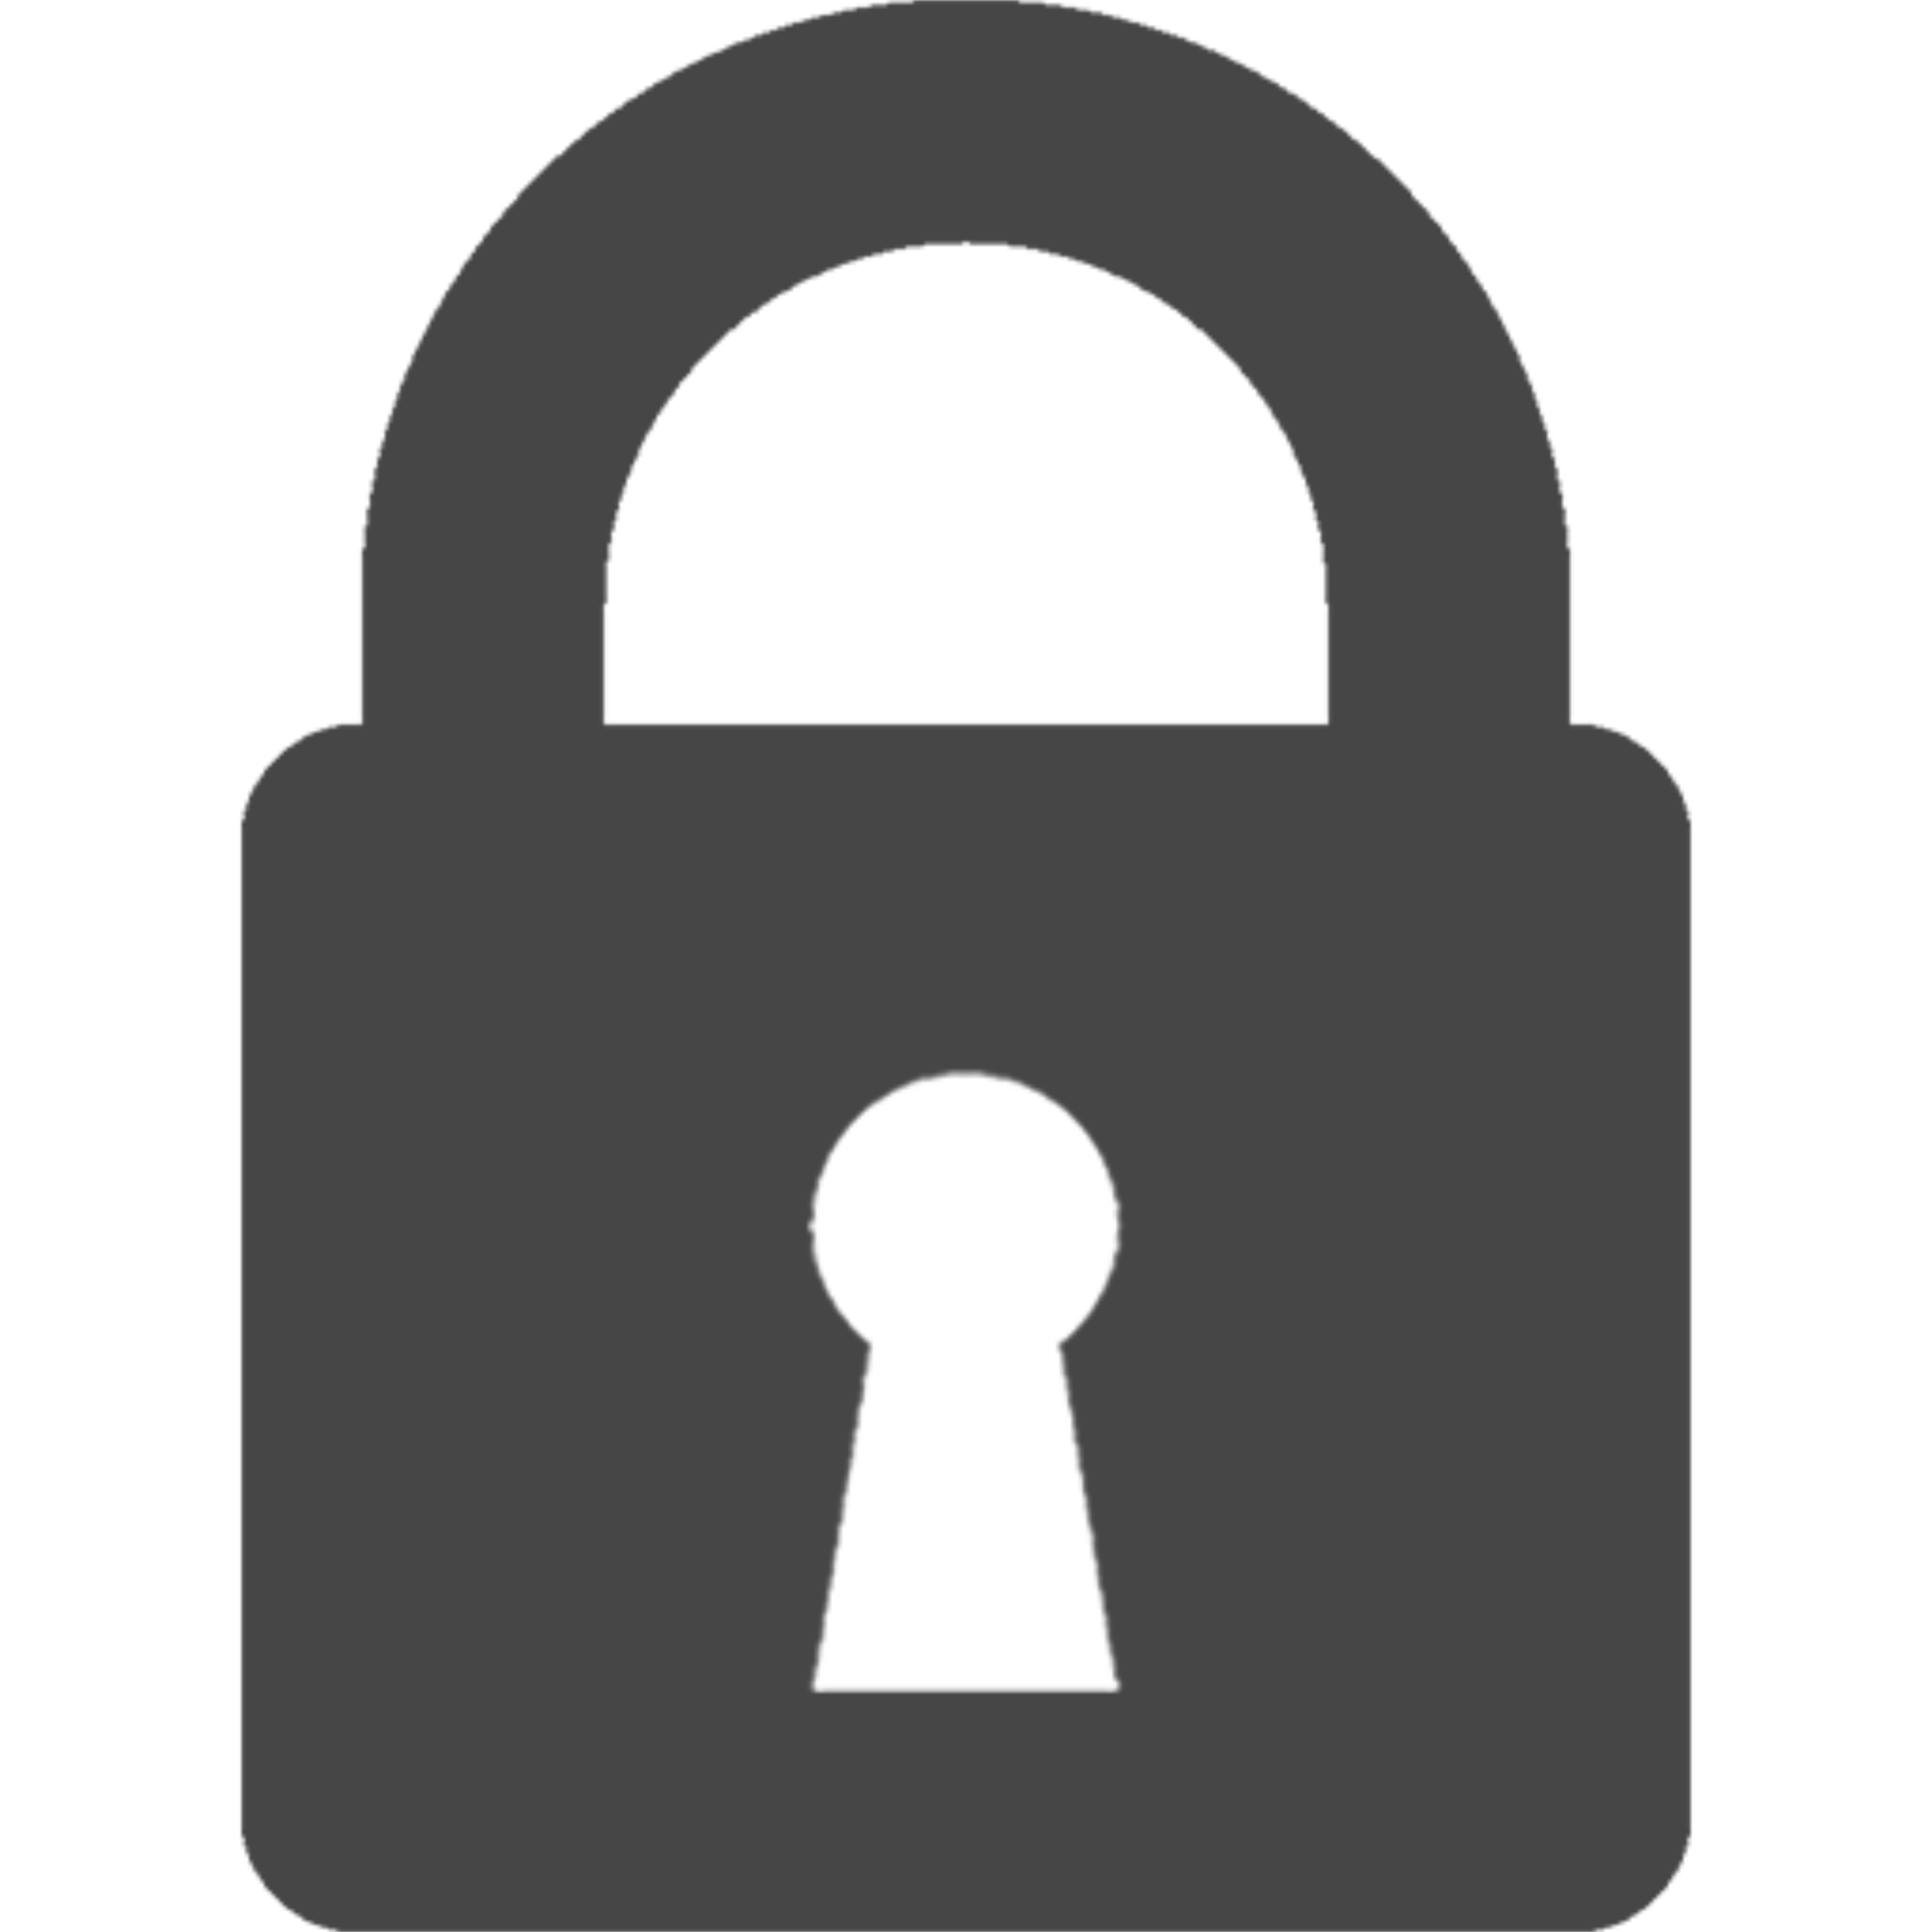 A lock symbol